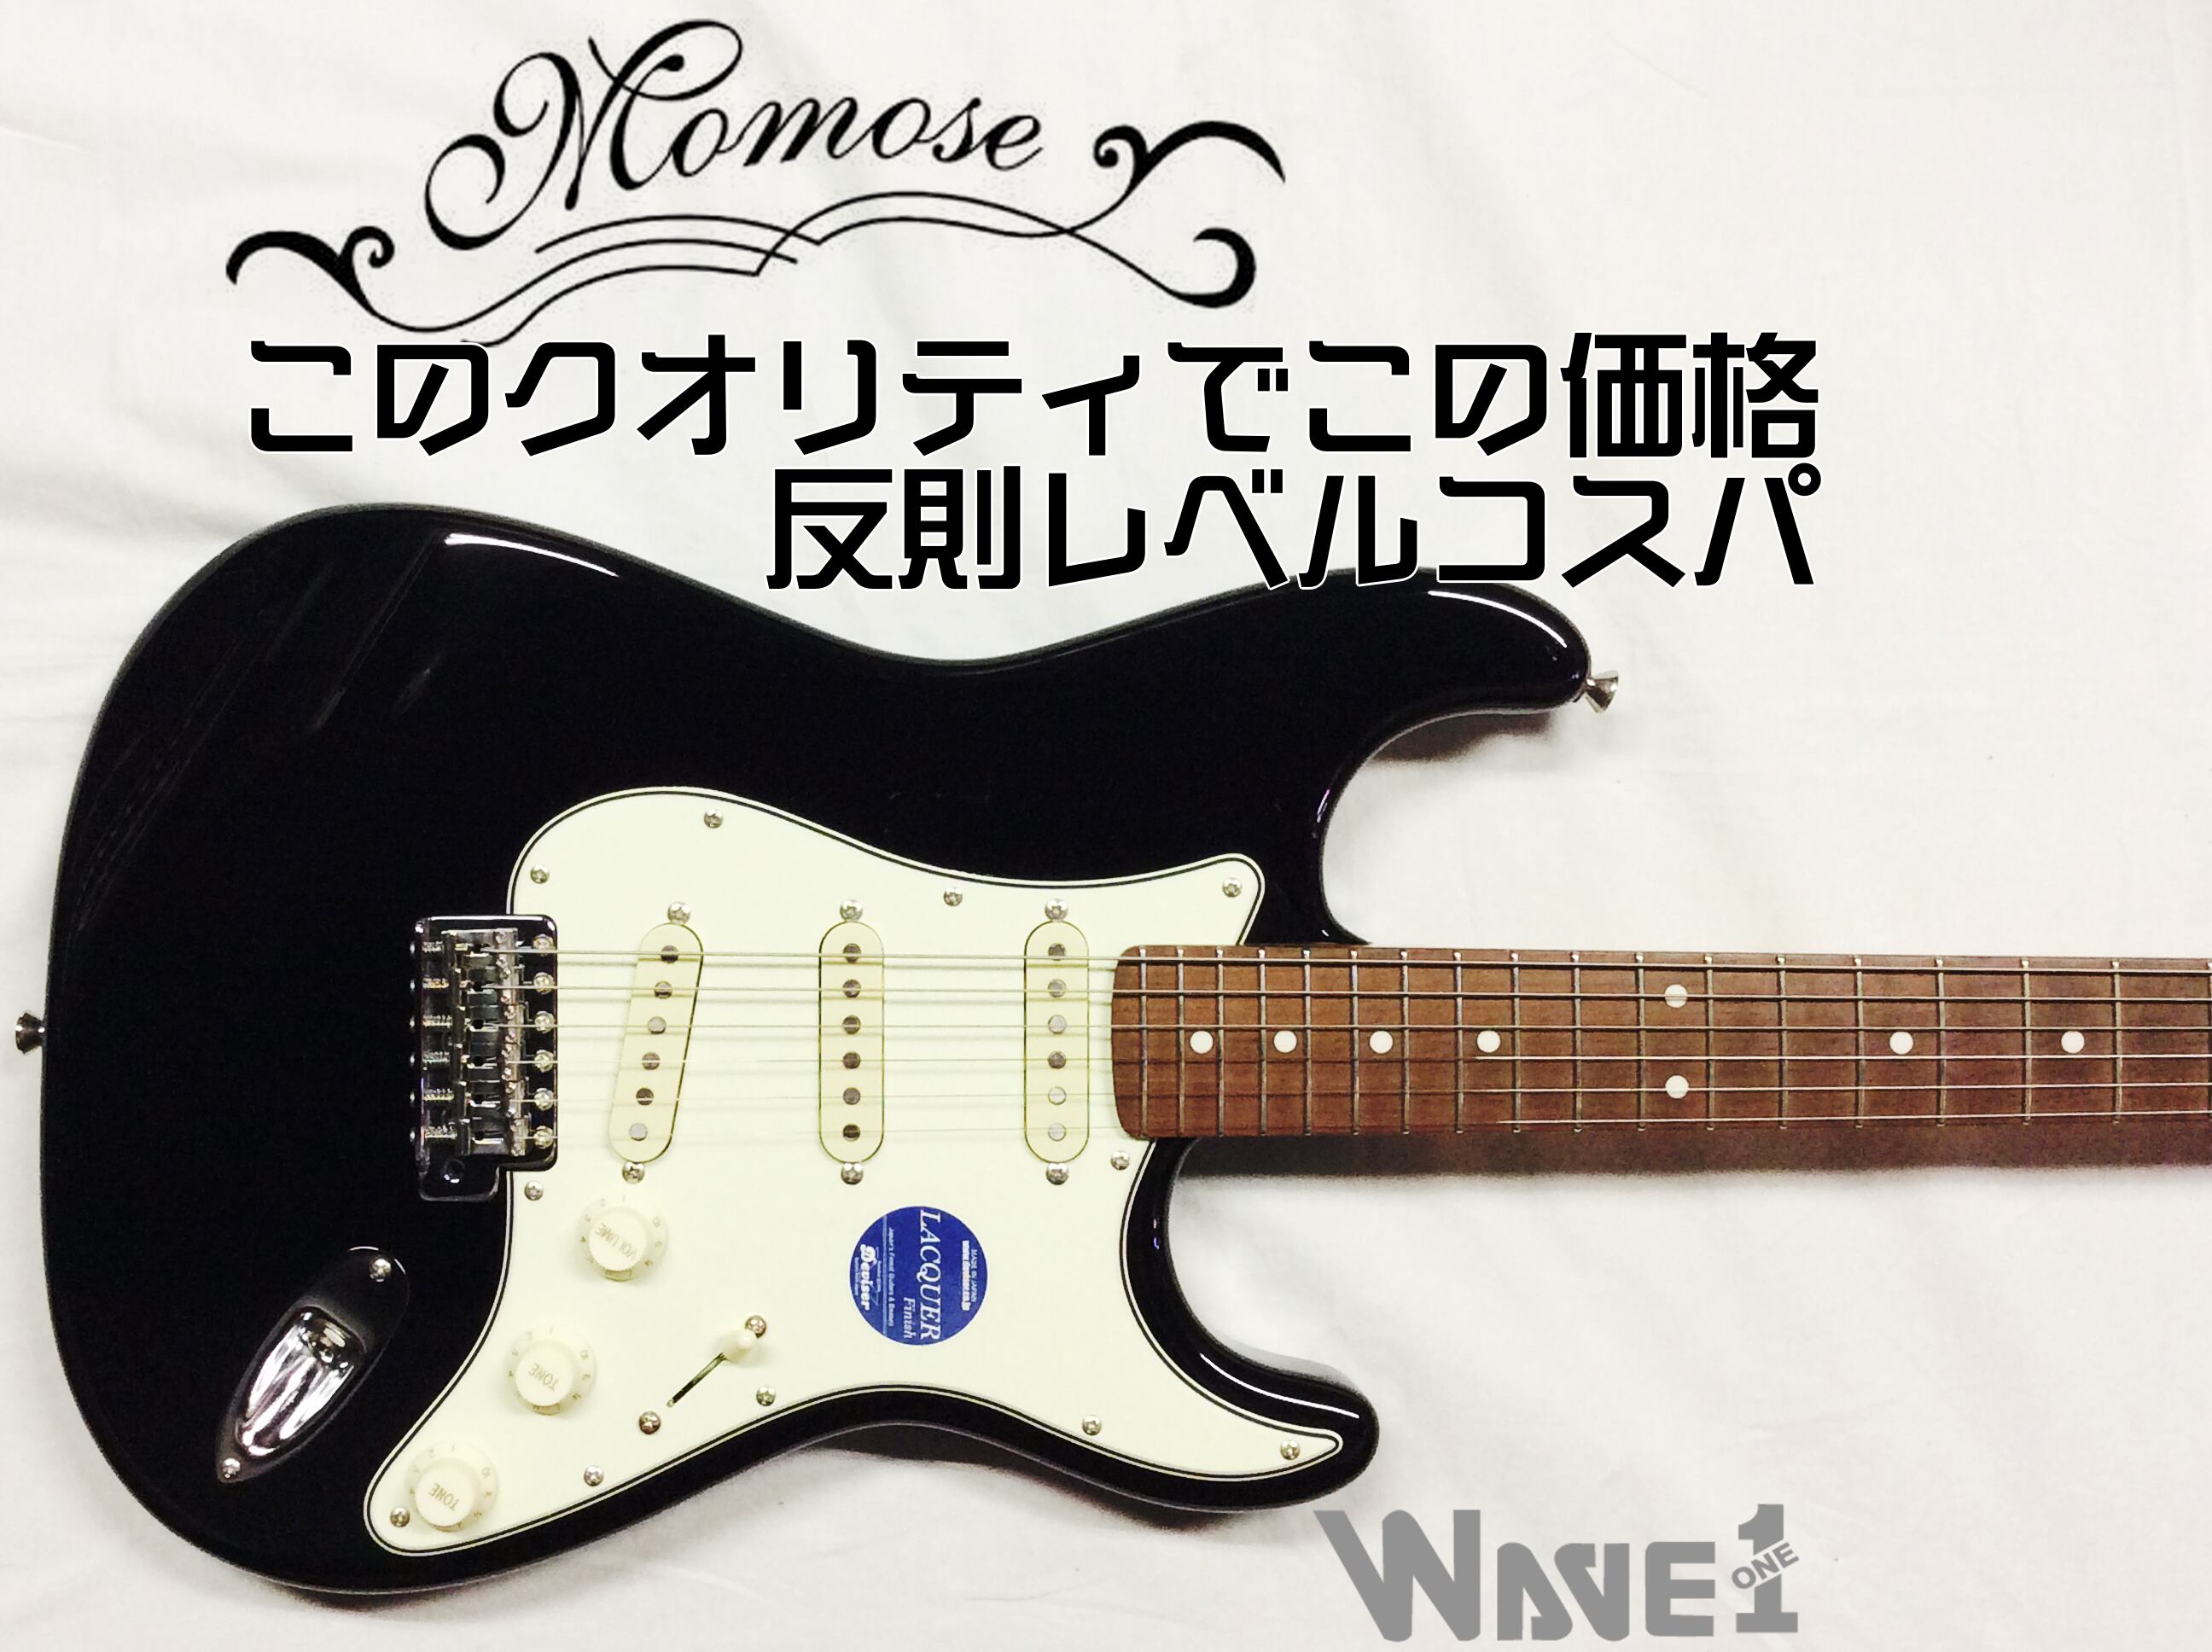 momose MST1-STD/J VWH ハカランダ指板 - エレキギター